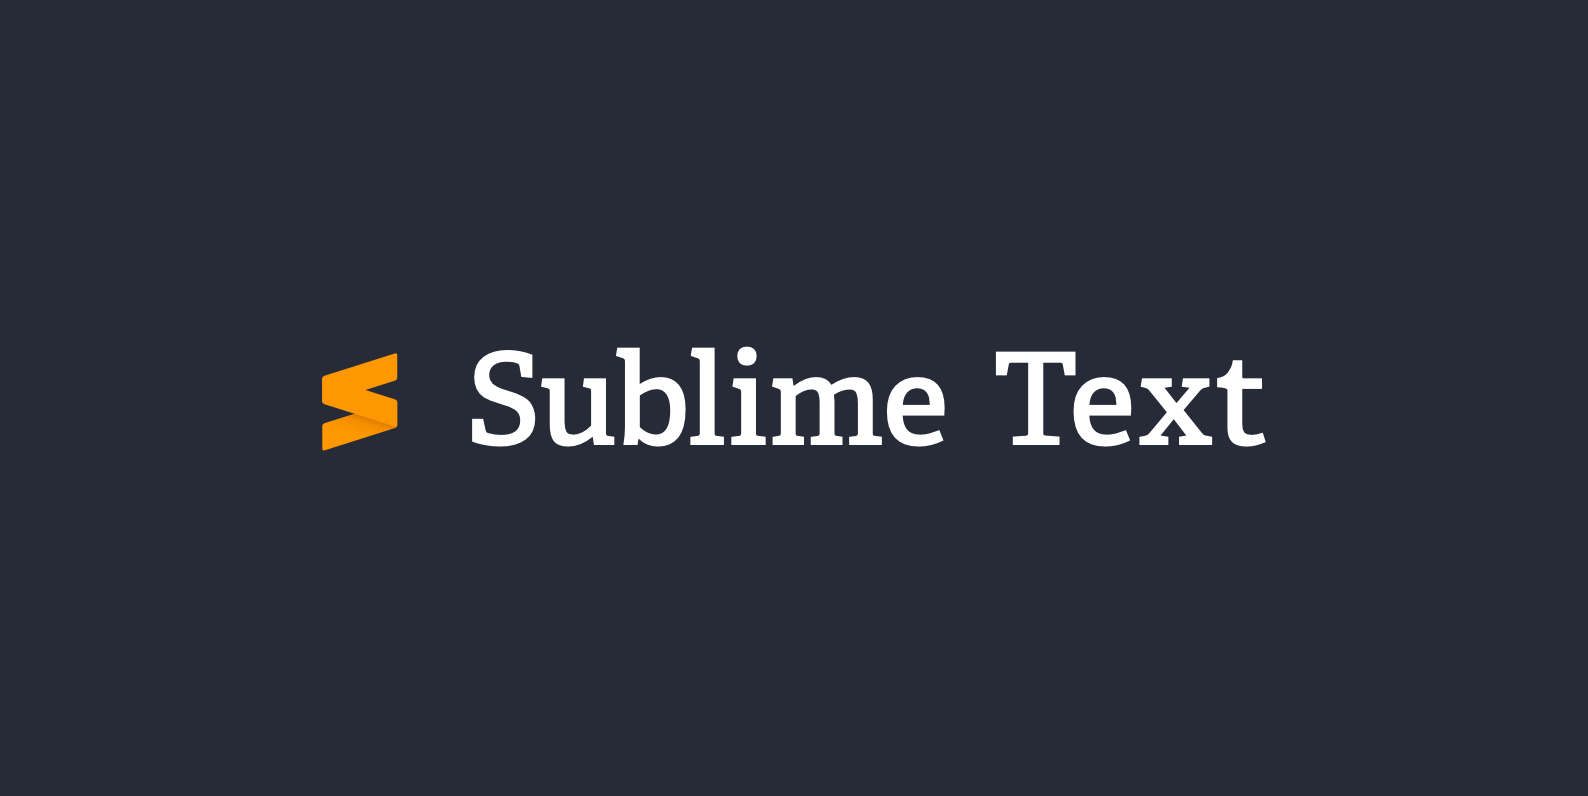 sublime text 3